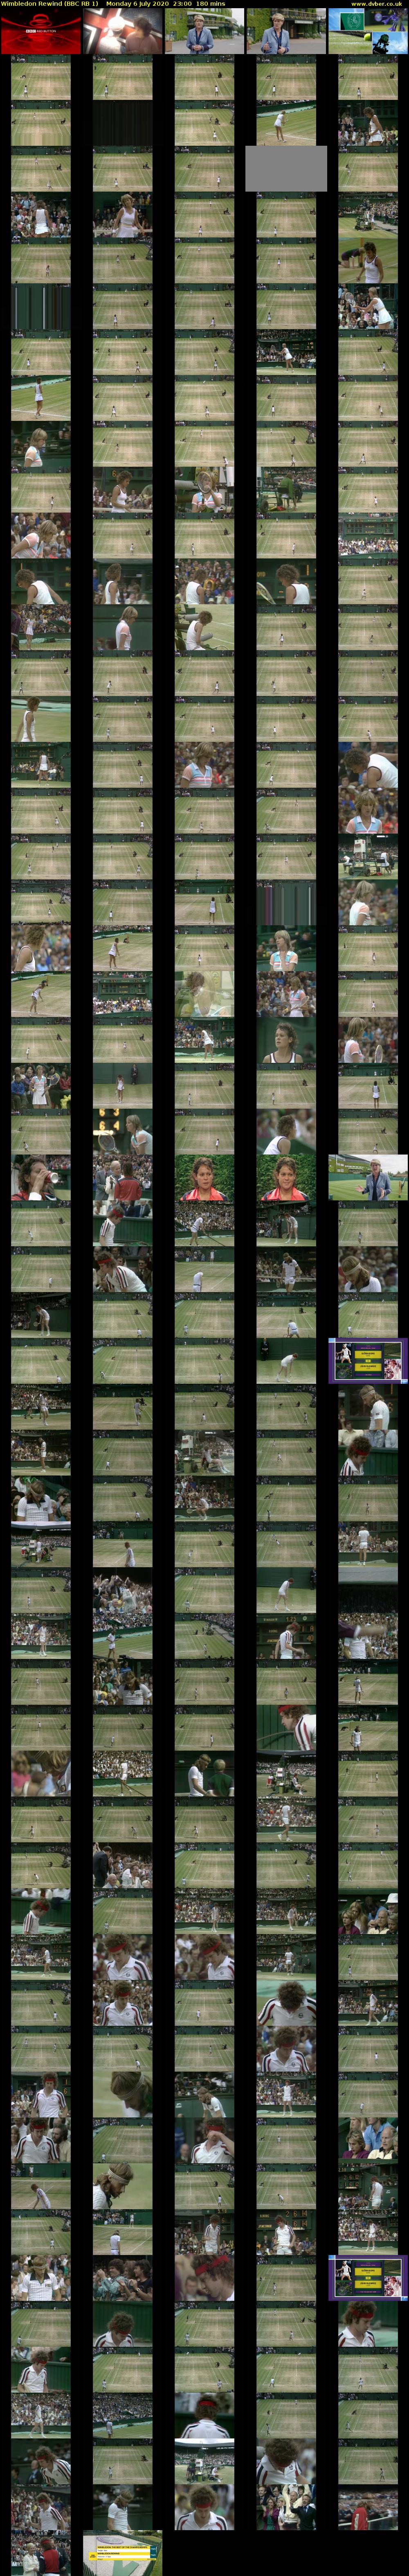 Wimbledon Rewind (BBC RB 1) Monday 6 July 2020 23:00 - 02:00